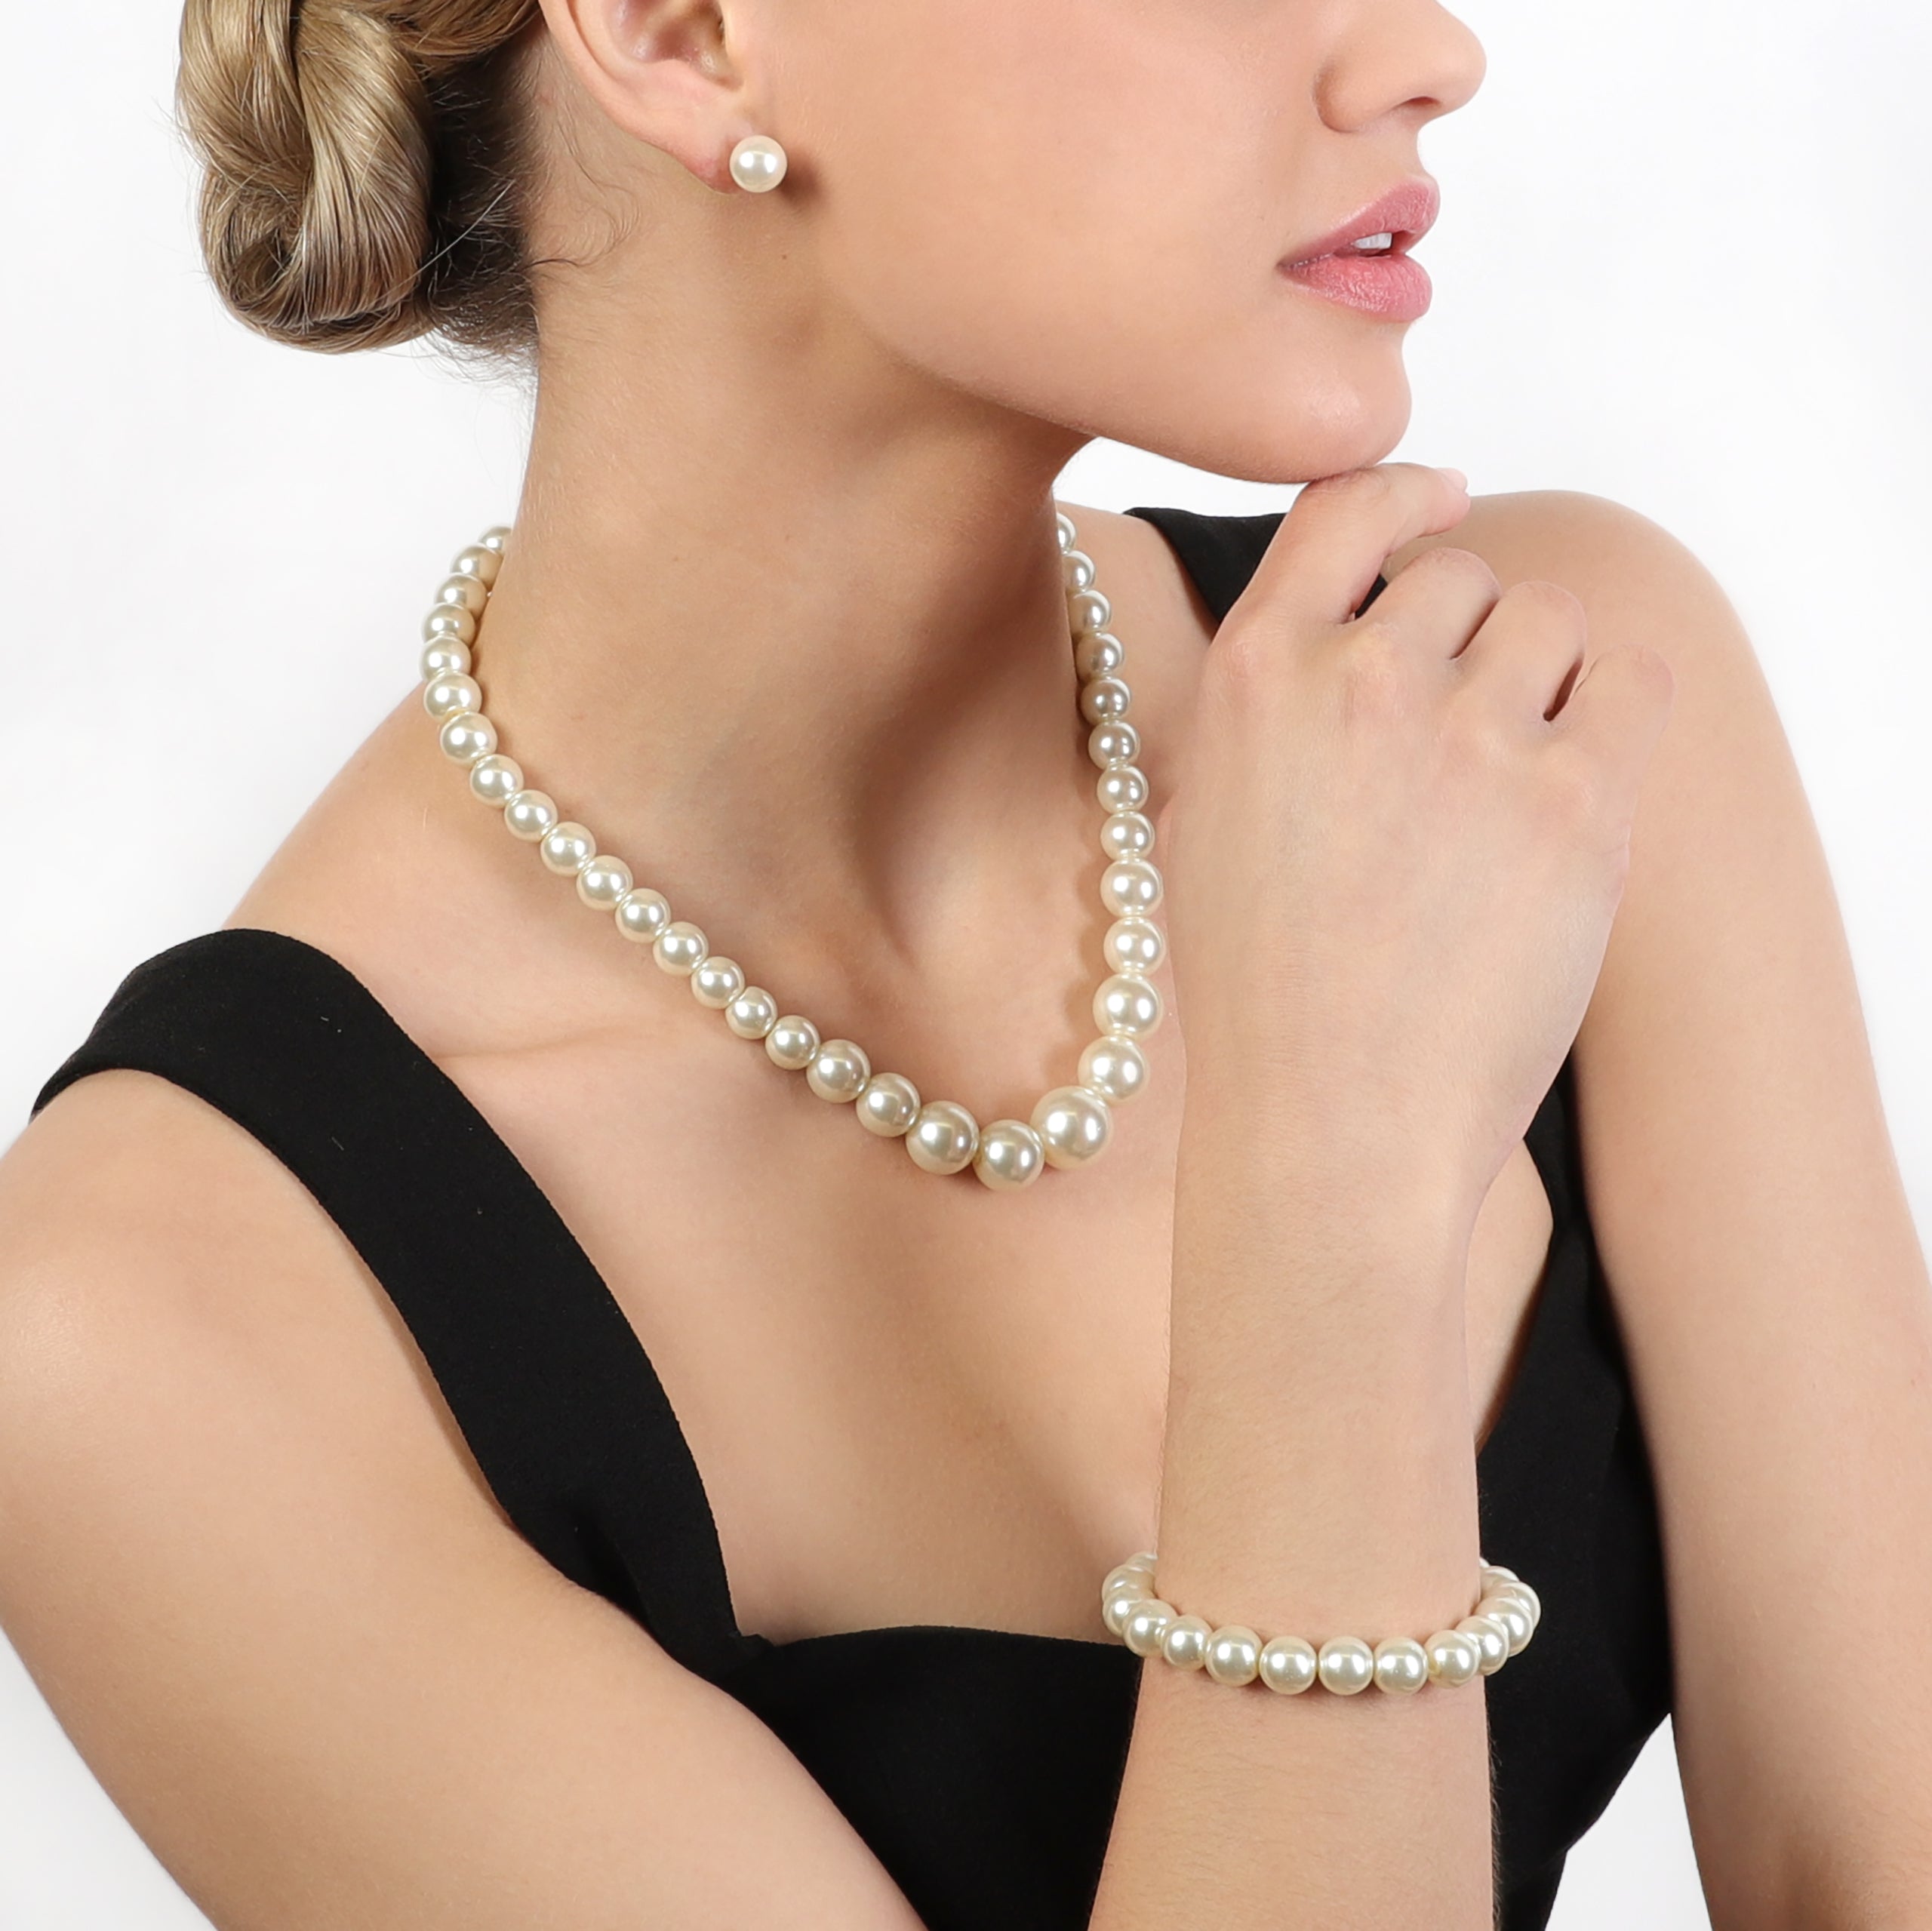 Feather Necklace Bracelet Earrings Ring Set | Sets Necklaces Earrings Women  - Fashion - Aliexpress